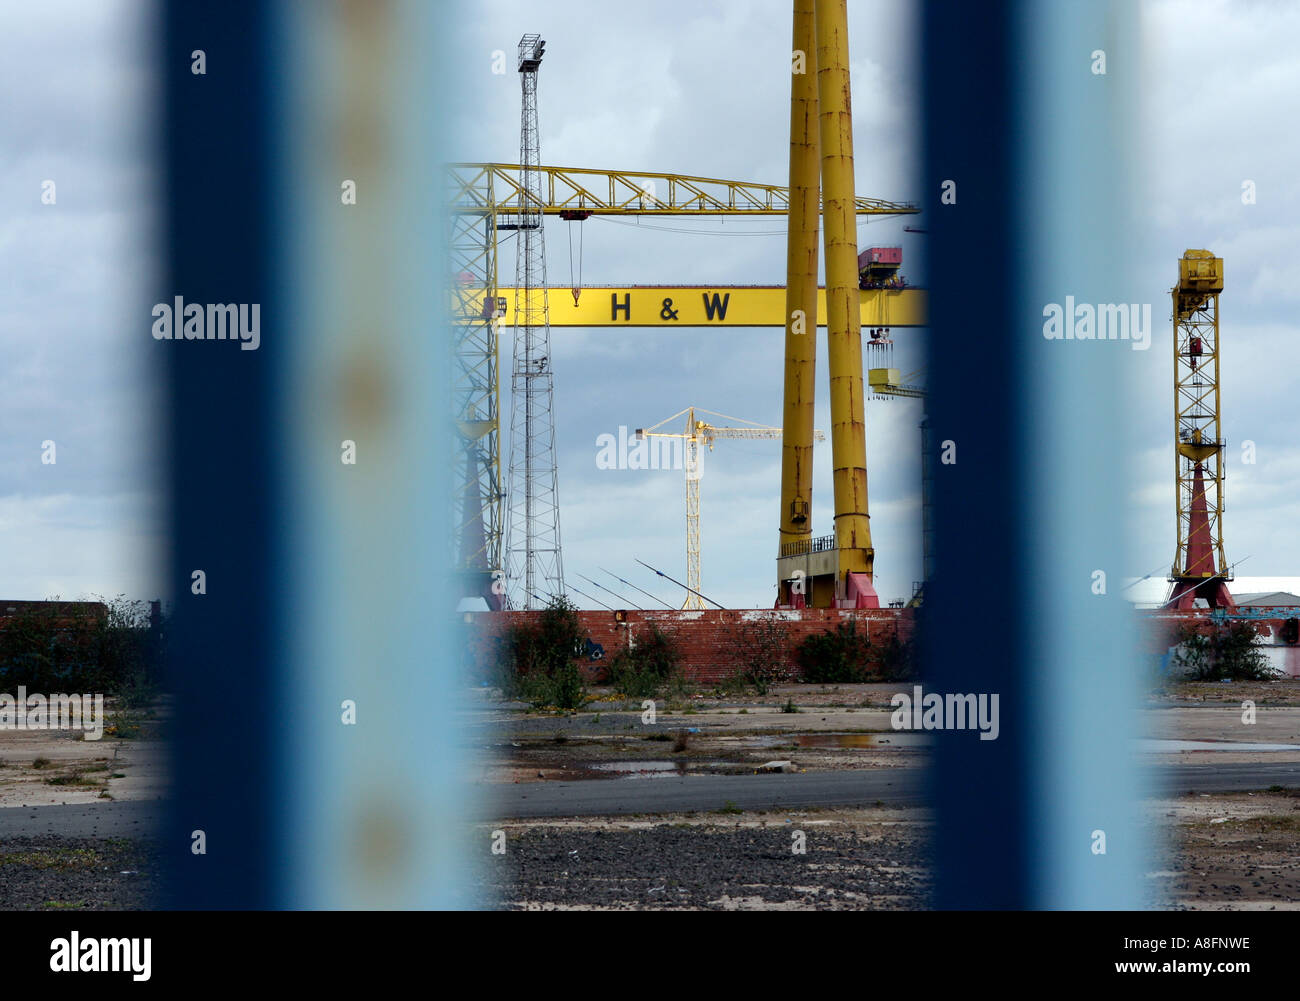 Cranes viewed through railings Stock Photo